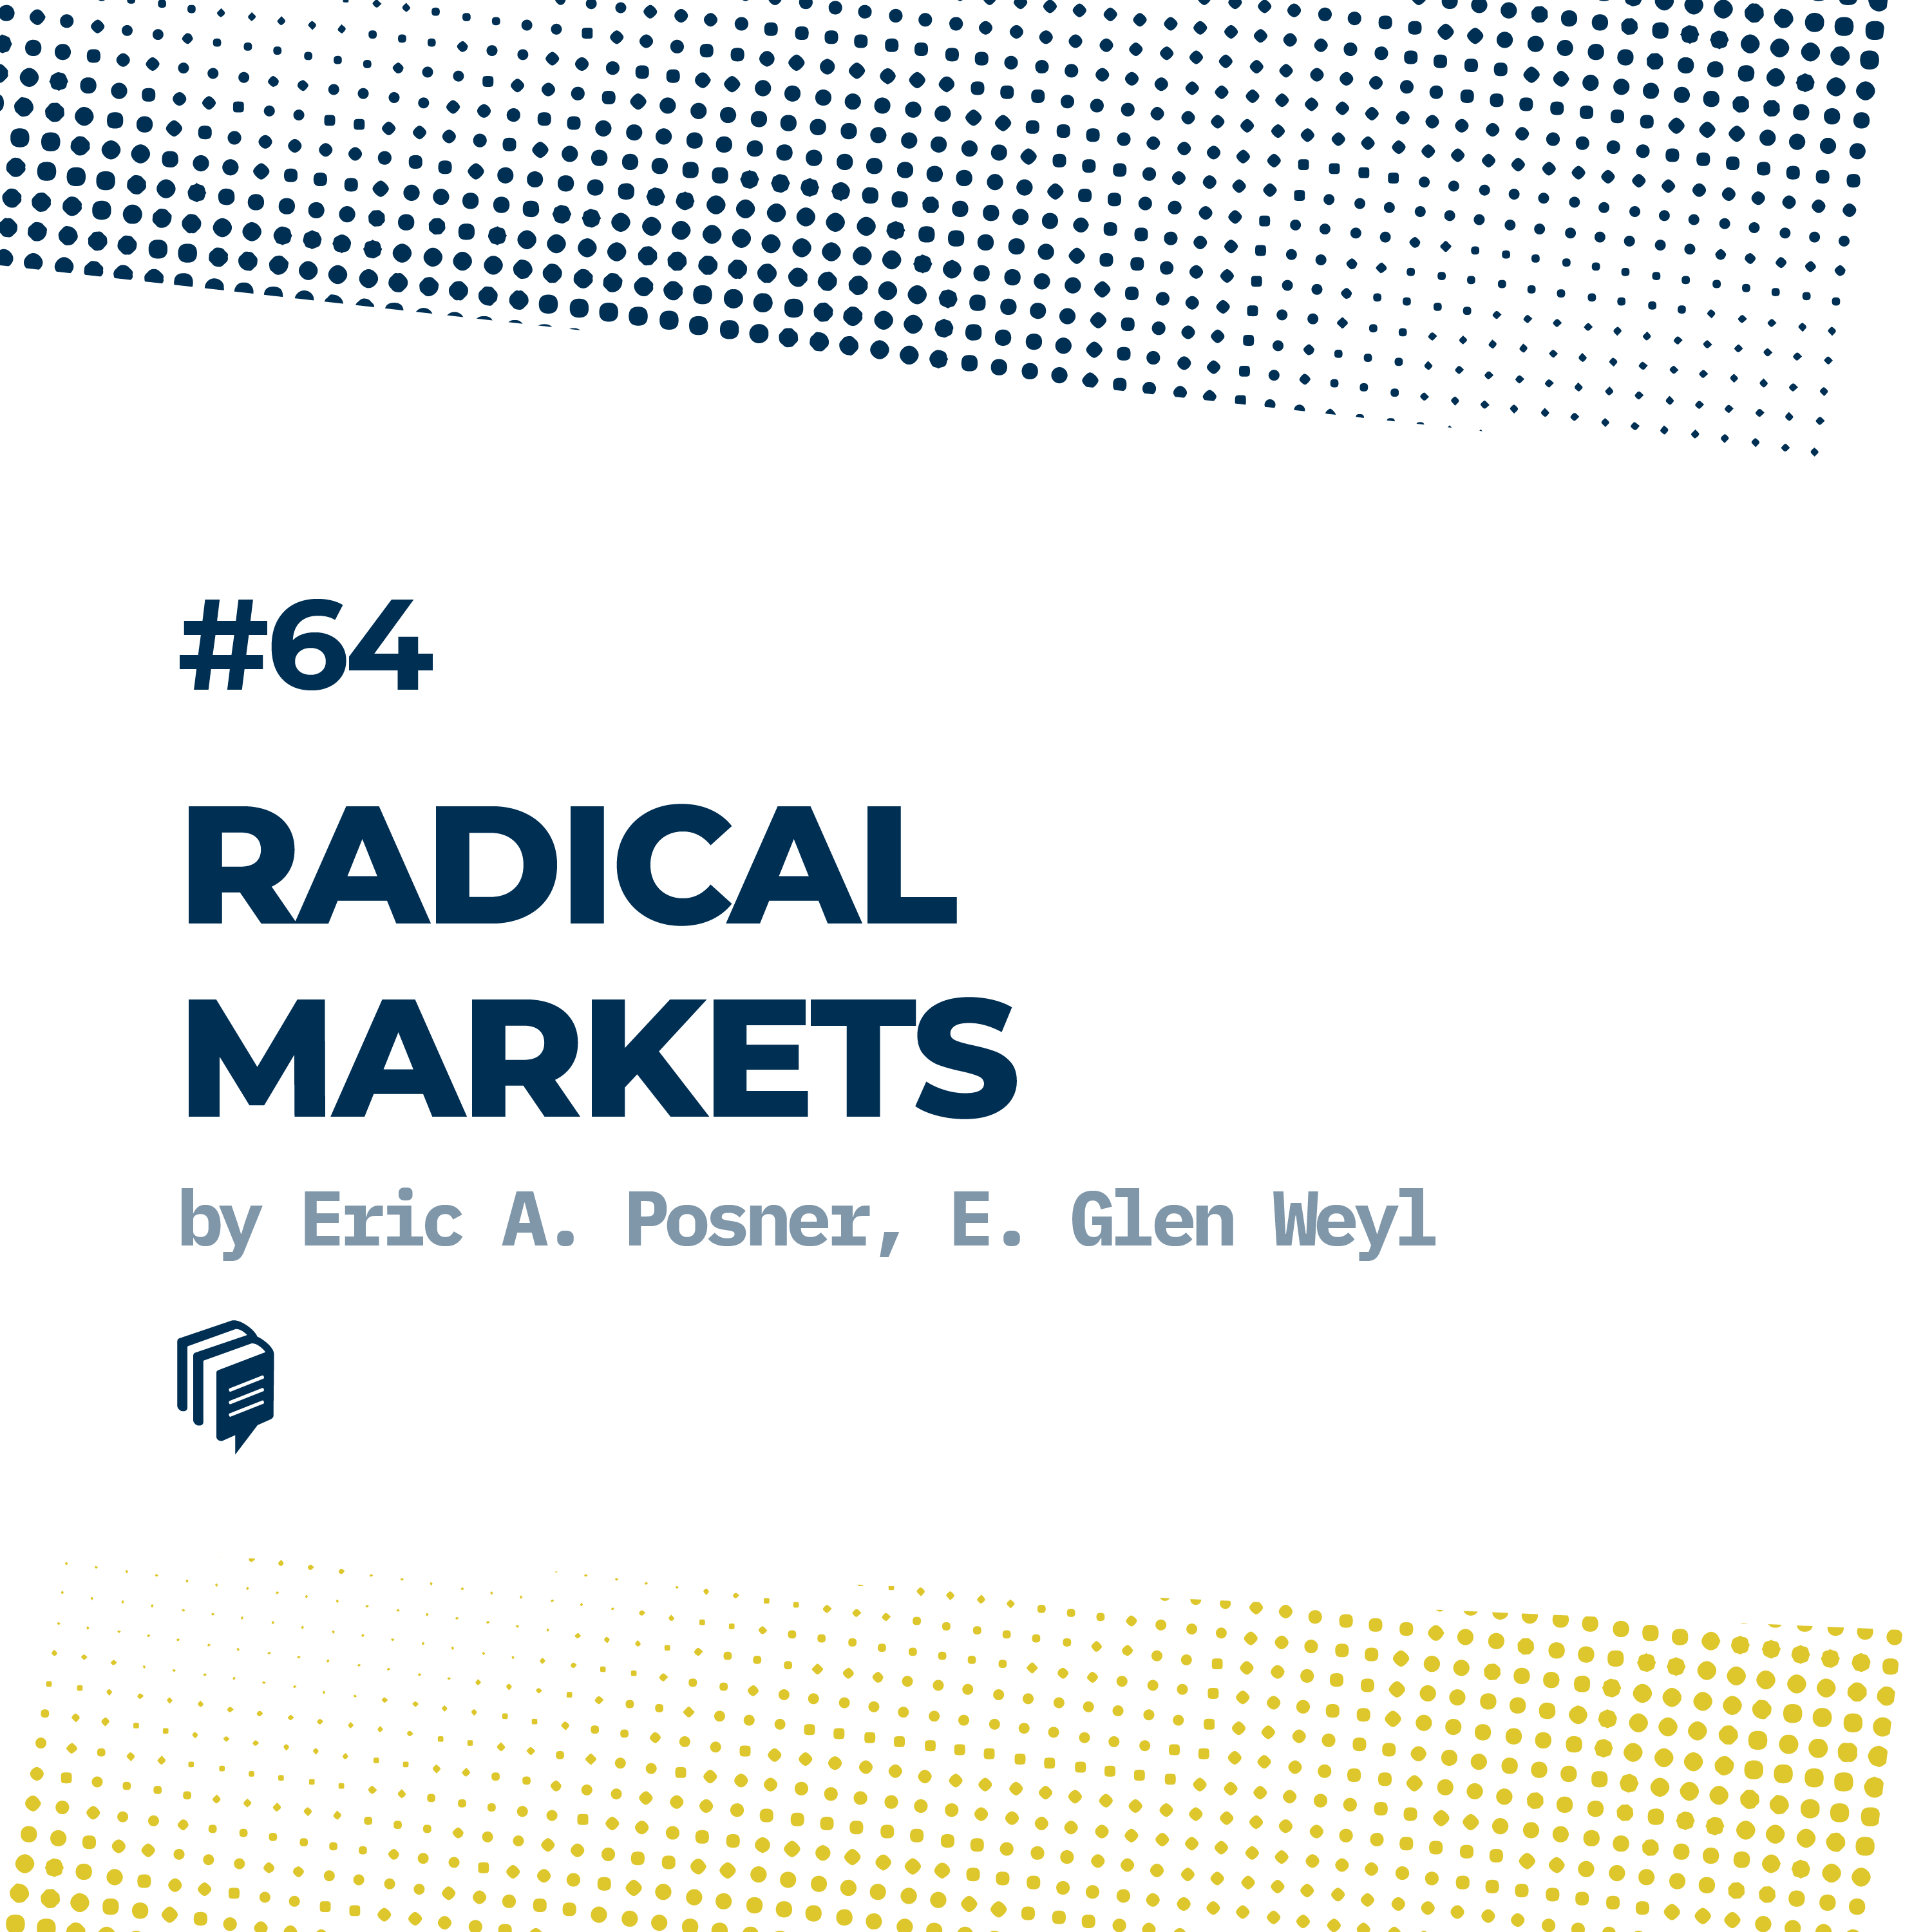 4-64: Radical Markets (بازارهای رادیکال)